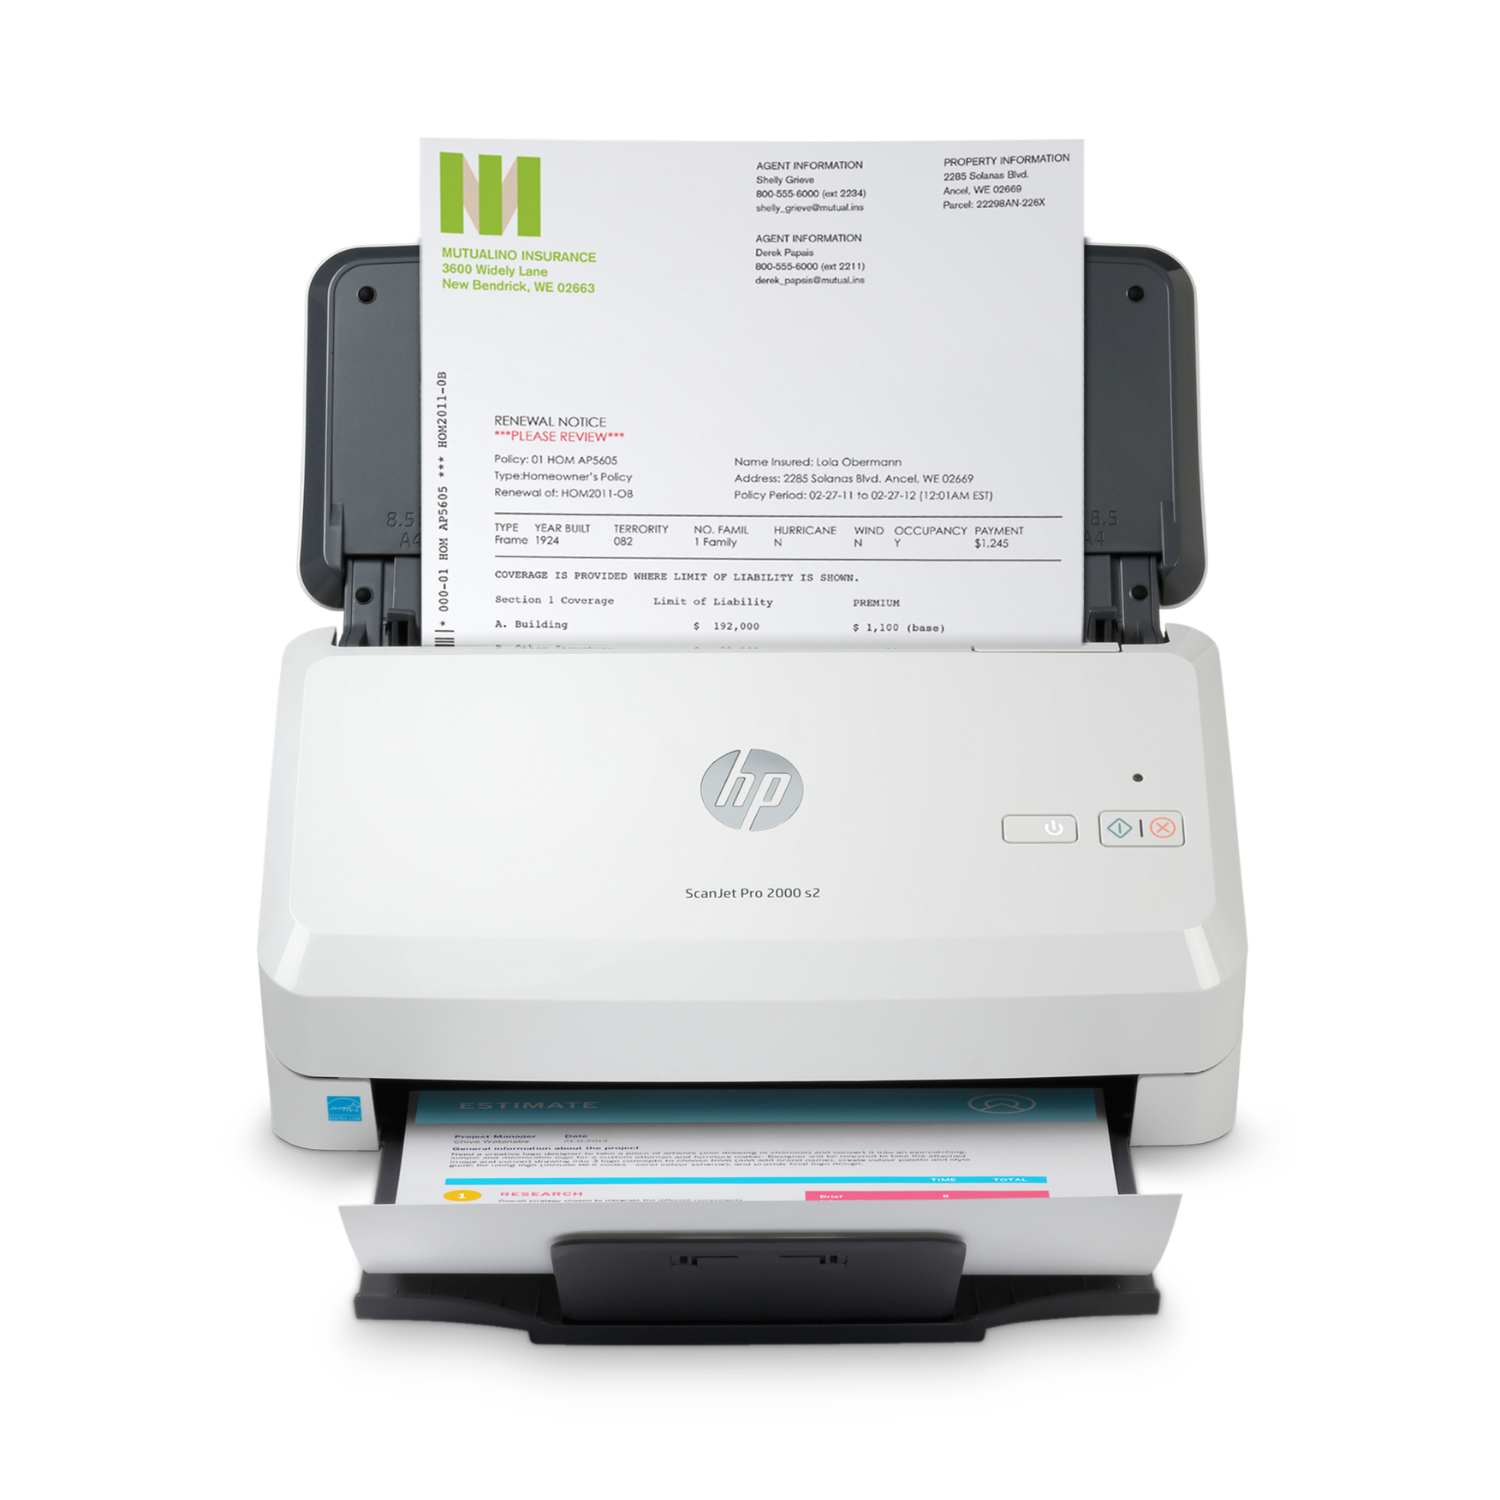 Escaner HP ScanJet Pro 2000 s2 (6FW06A)